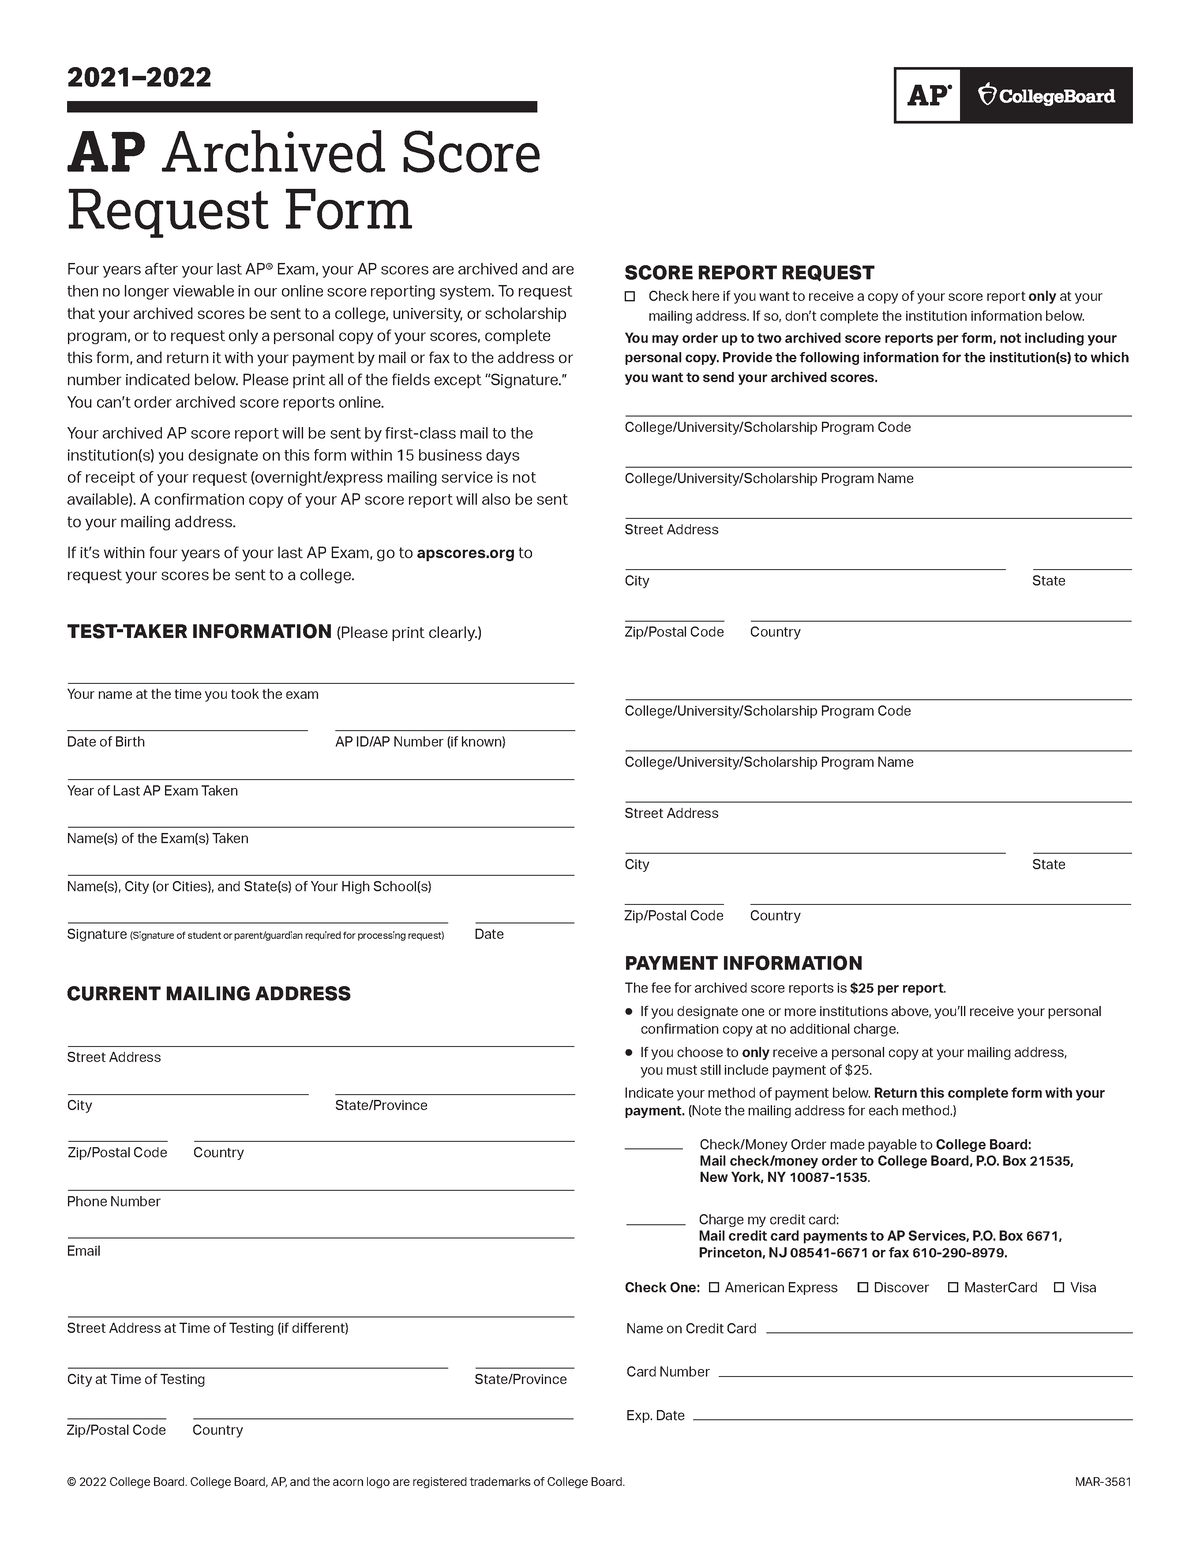 Ap Archived Score Request Form 2021 AP Archived Score Request Form 